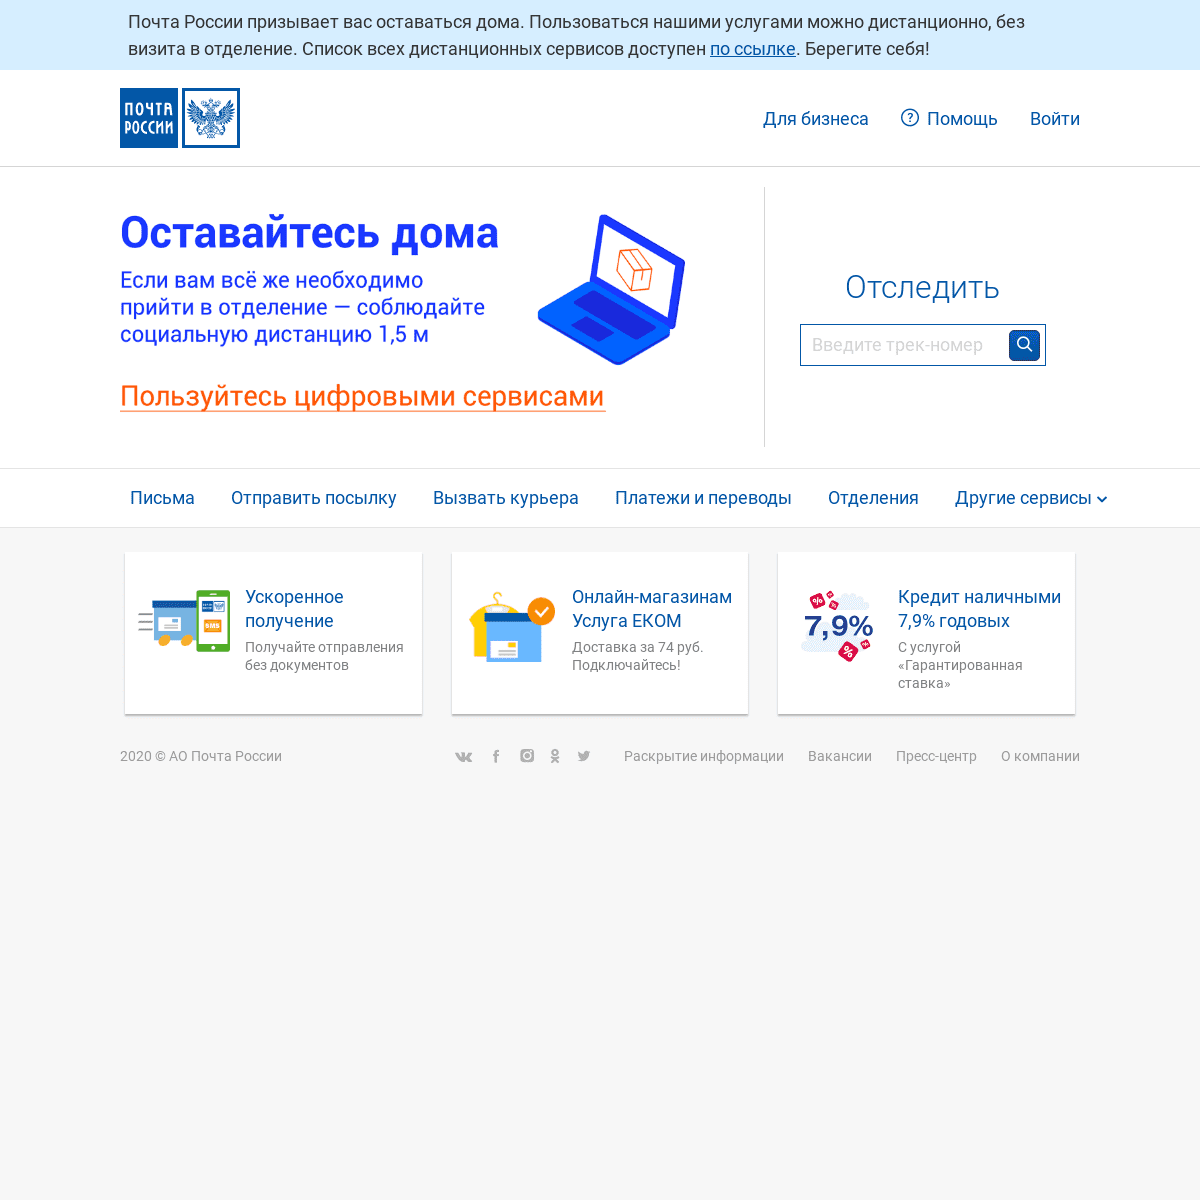 A complete backup of russianpost.ru